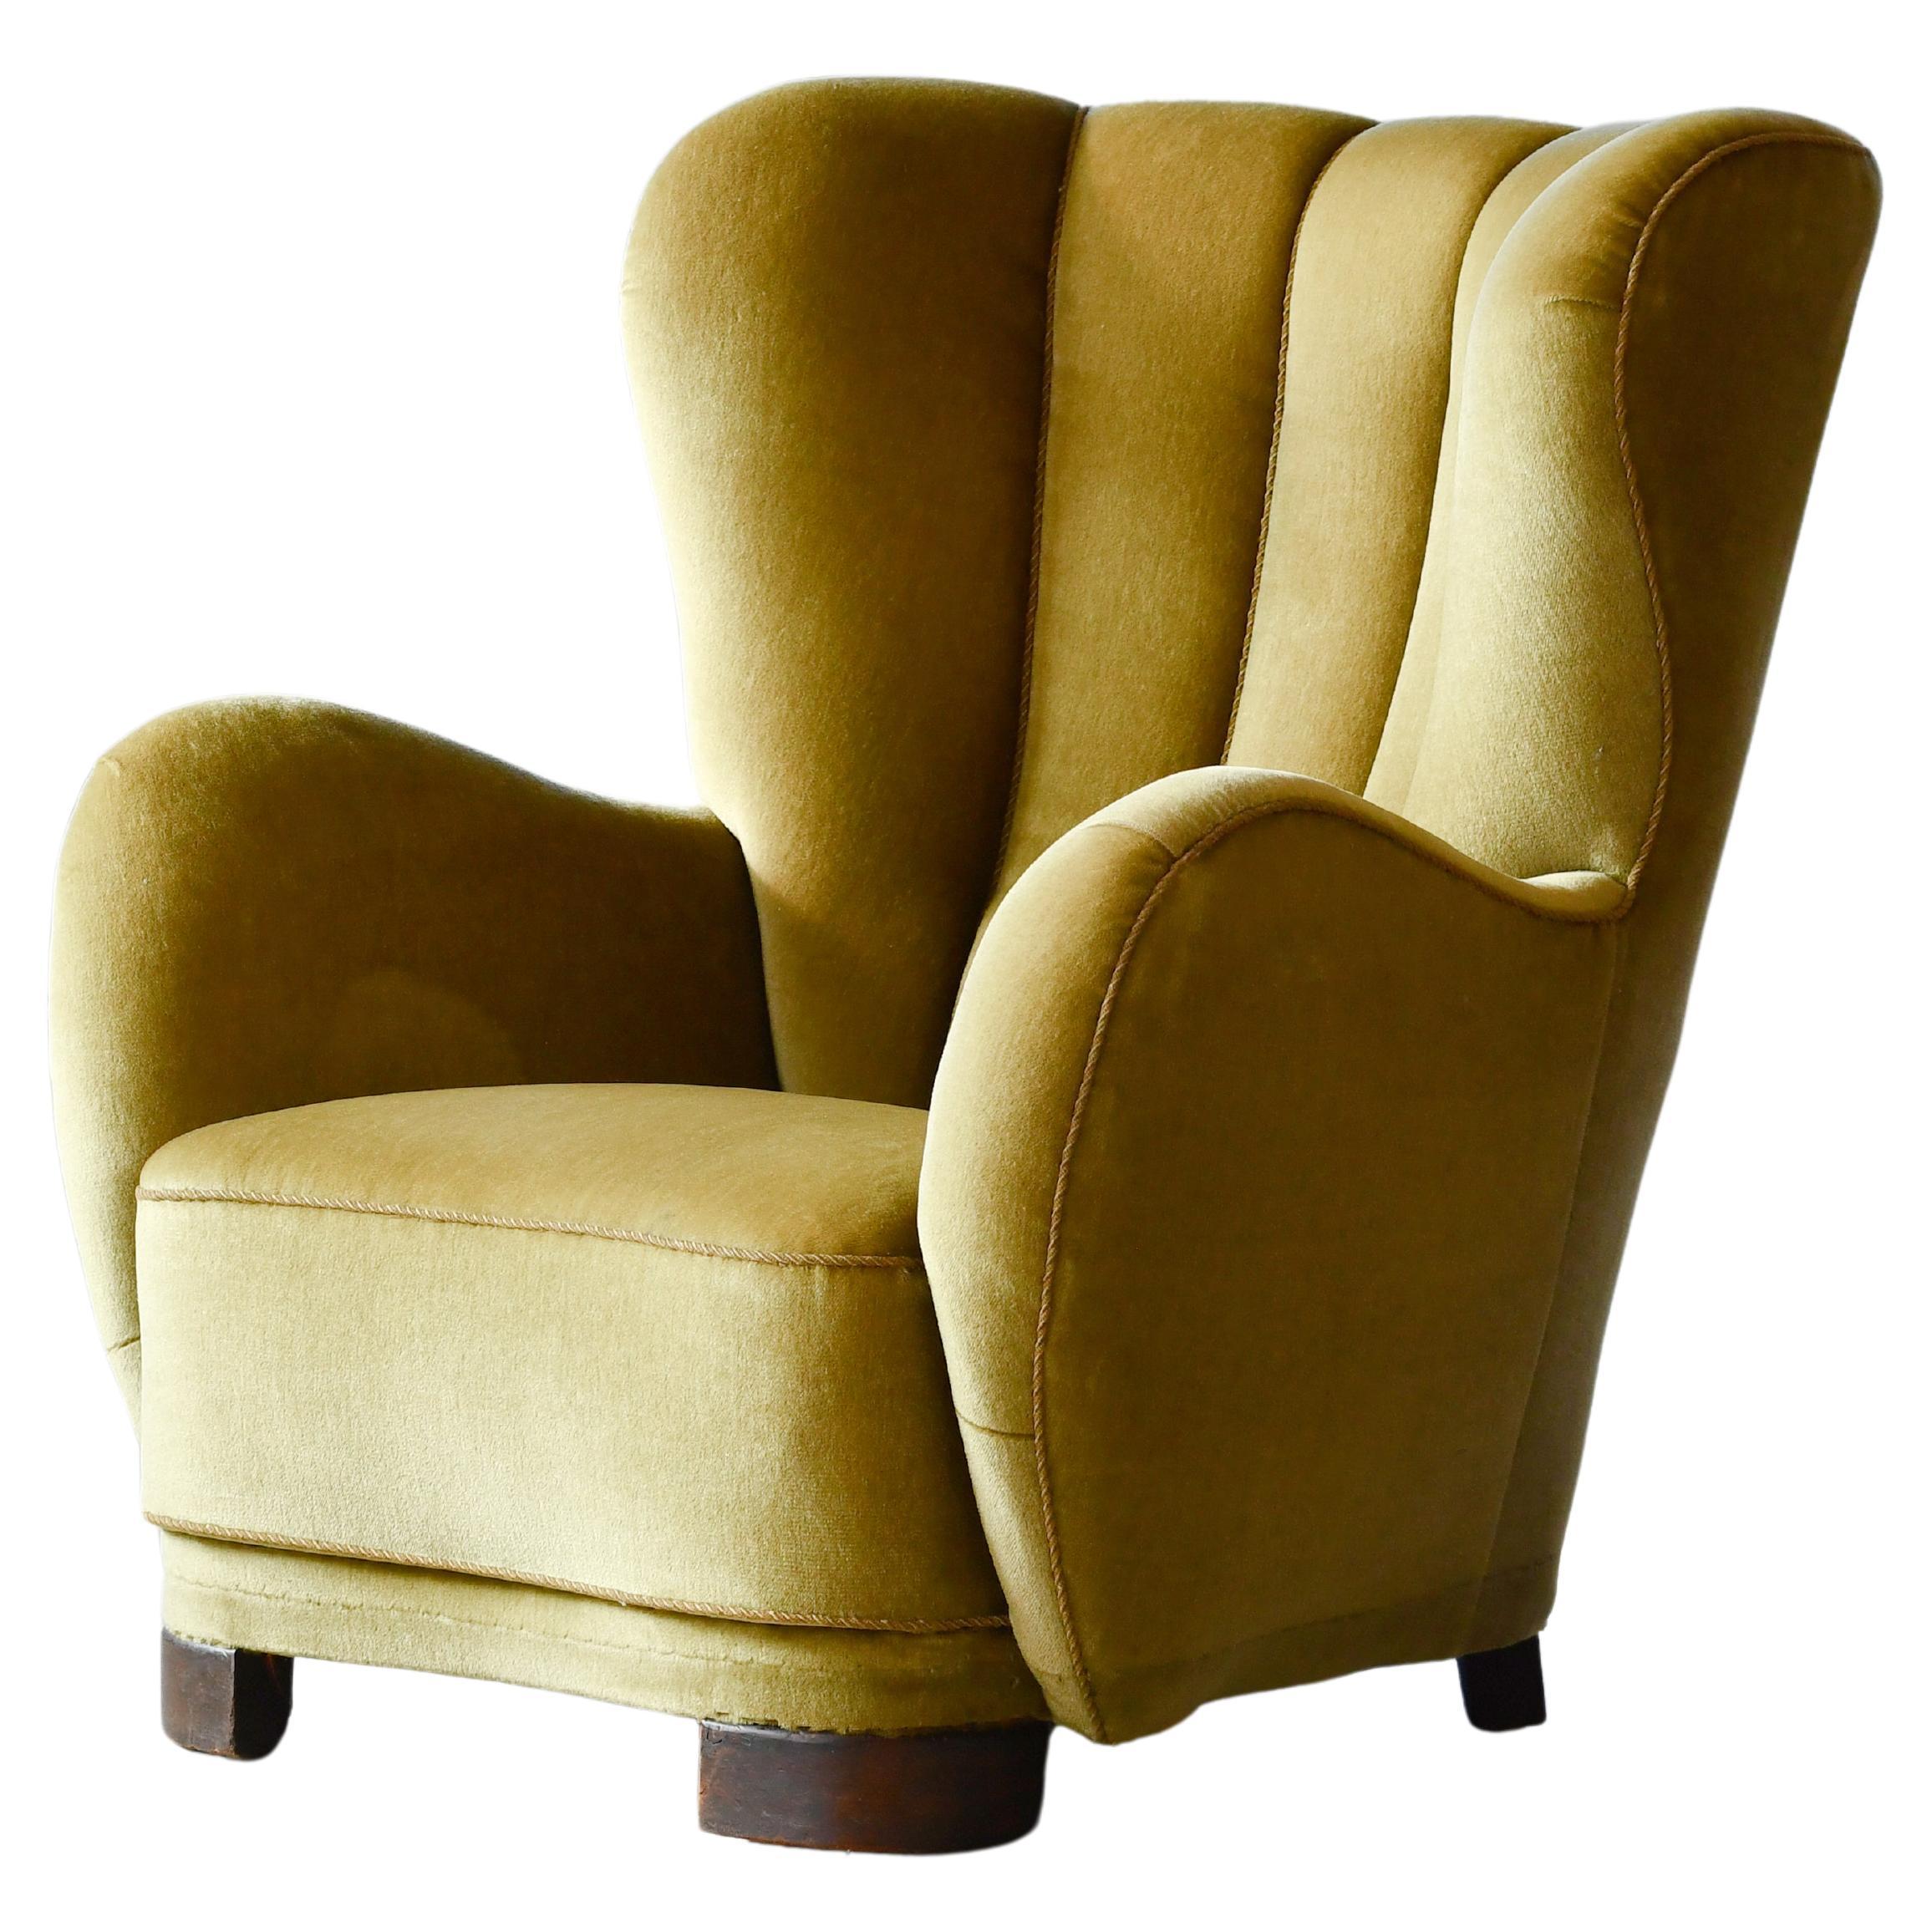 Mogens Lassen Style Danish 1940s Channel Back Lounge Chair in Mohair Fabric